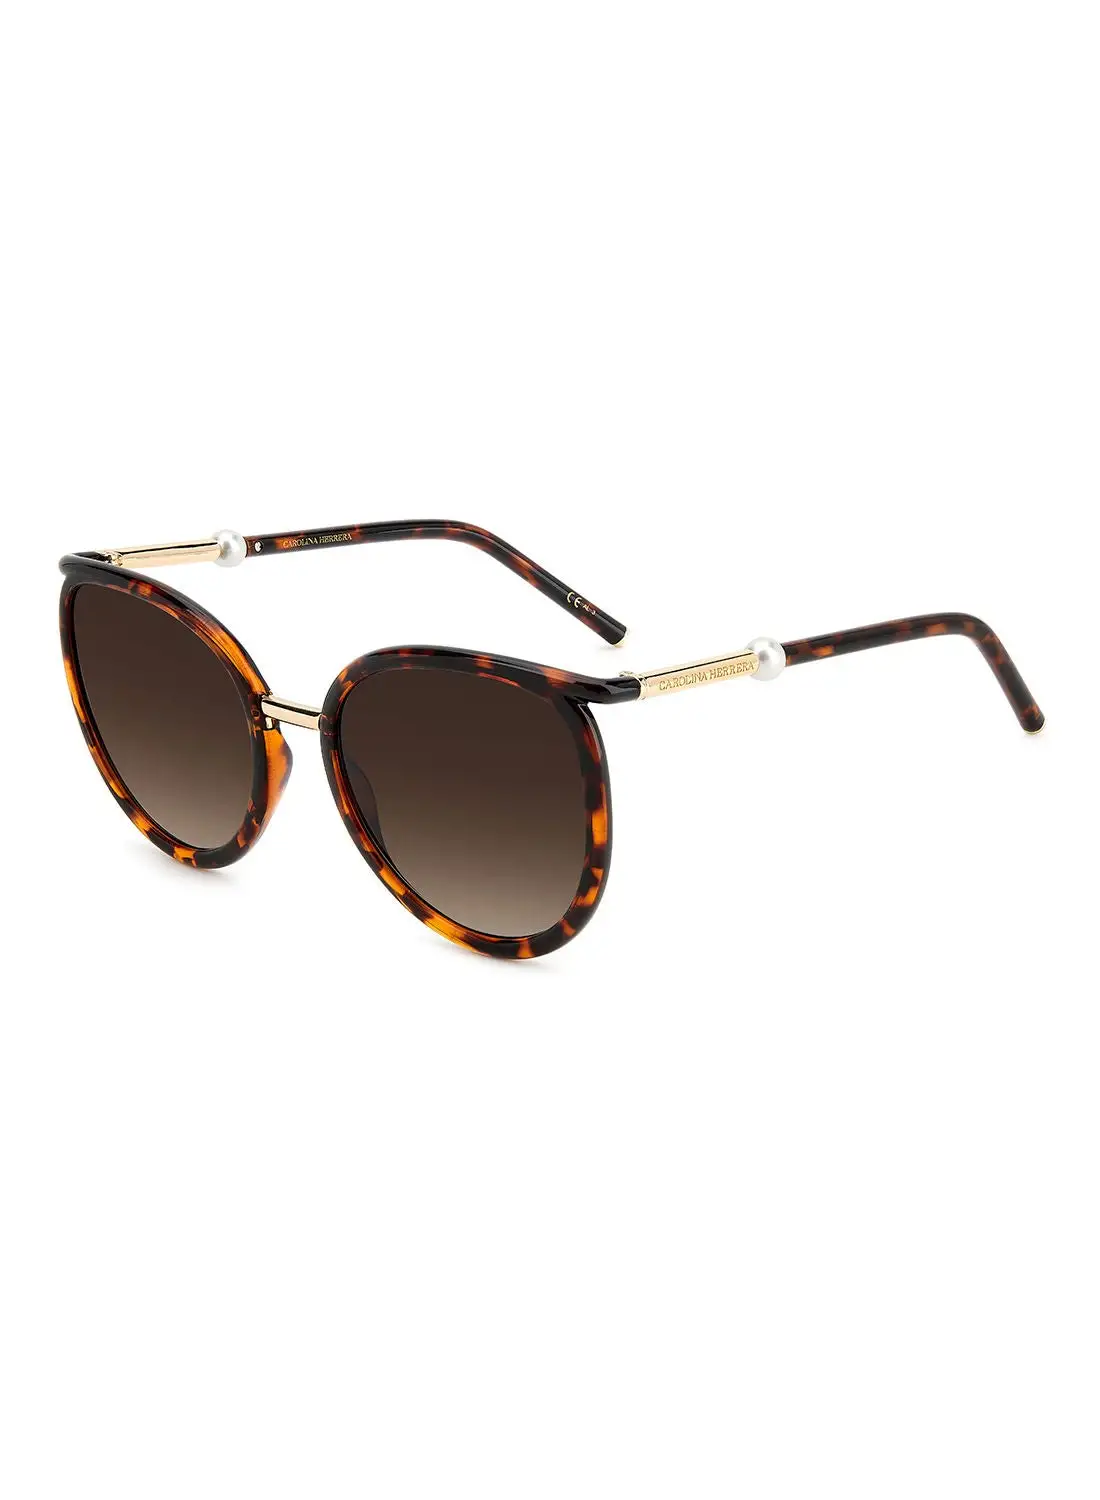 CAROLINA HERRERA Women's UV Protection Round Sunglasses - Her 0077/S Hvn 59 - Lens Size: 59 Mm